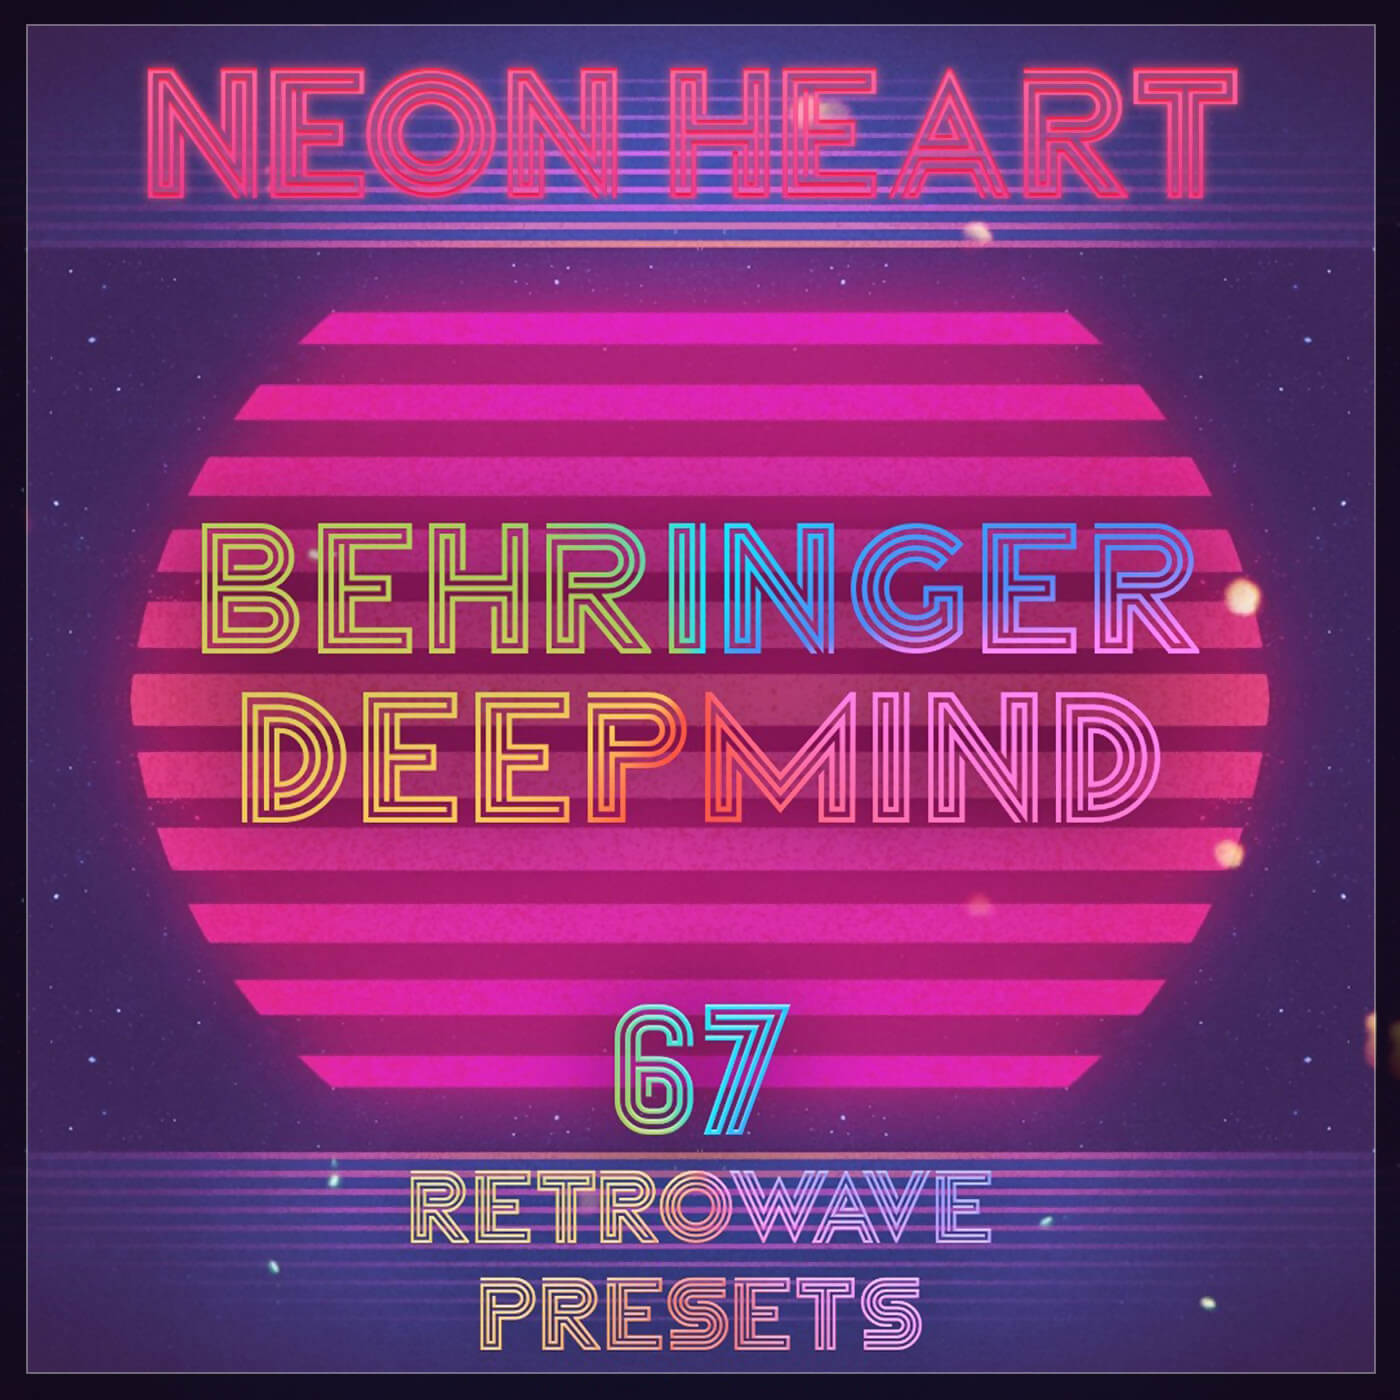 next level Retrowave and synthwave sounds for Behringer Deepmind